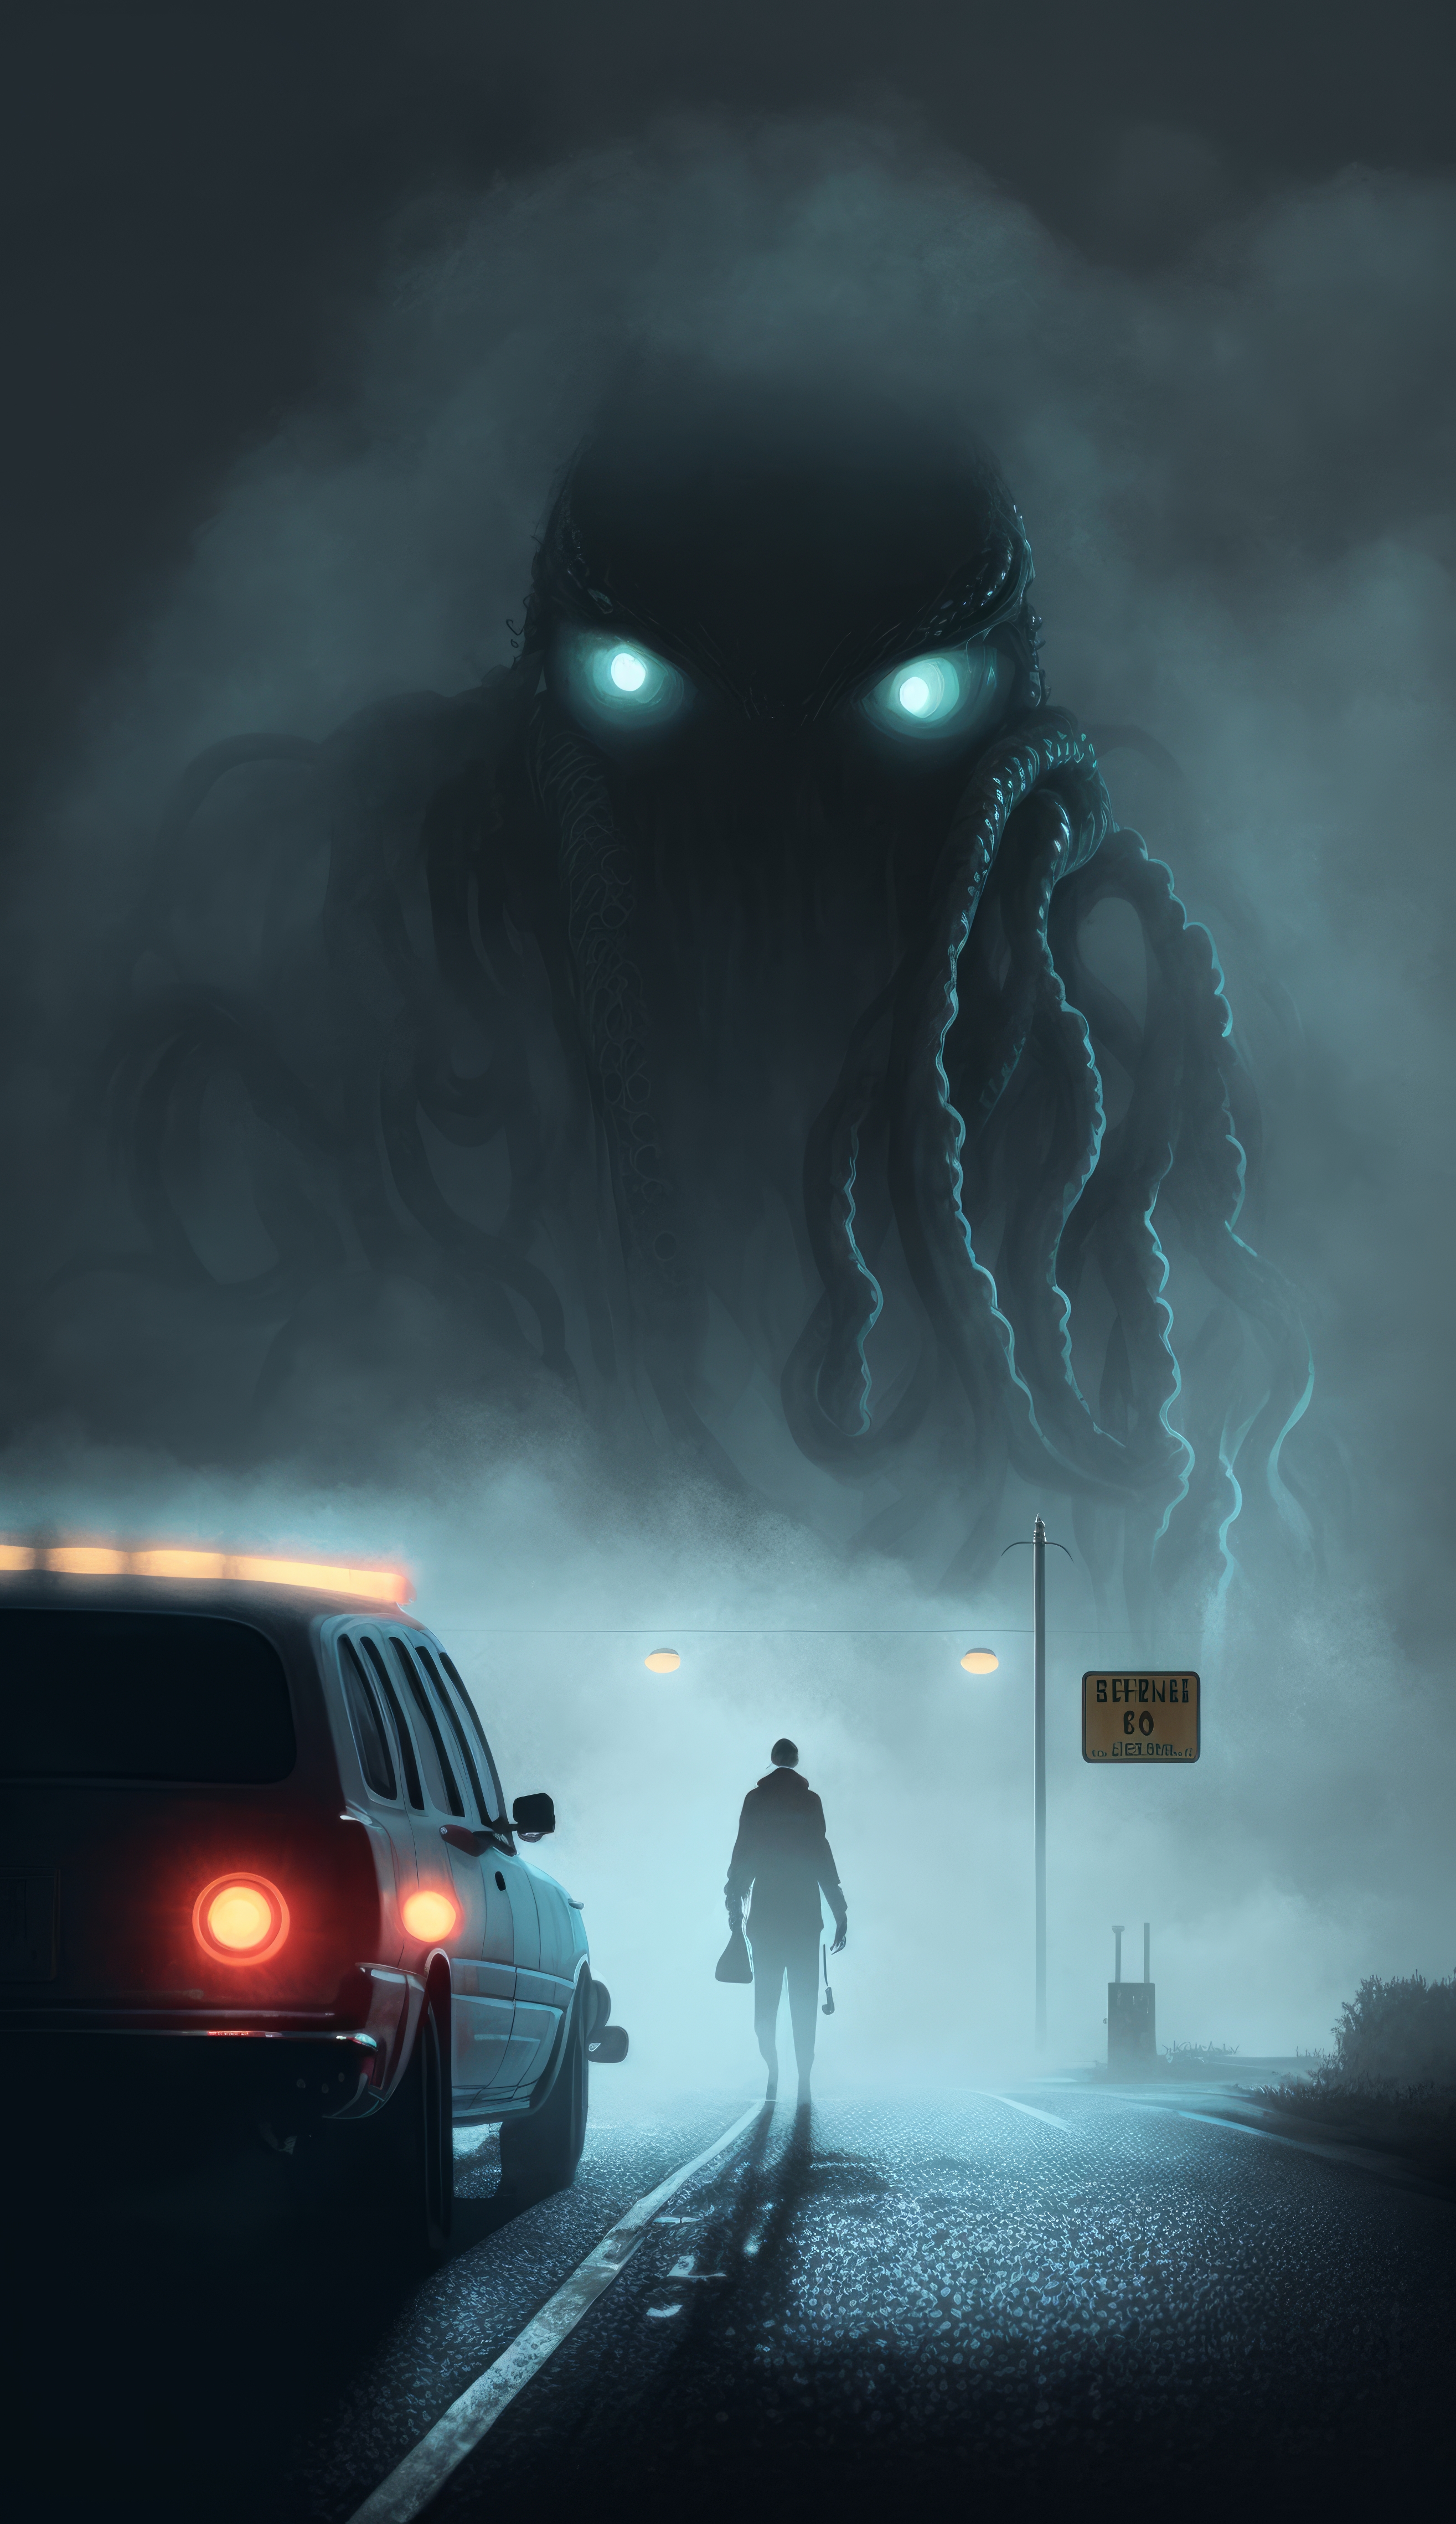 Ai Art Illustration Vertical Portrait Display Mist H P Lovecraft Horror Creature Car Taillights 2630x4559